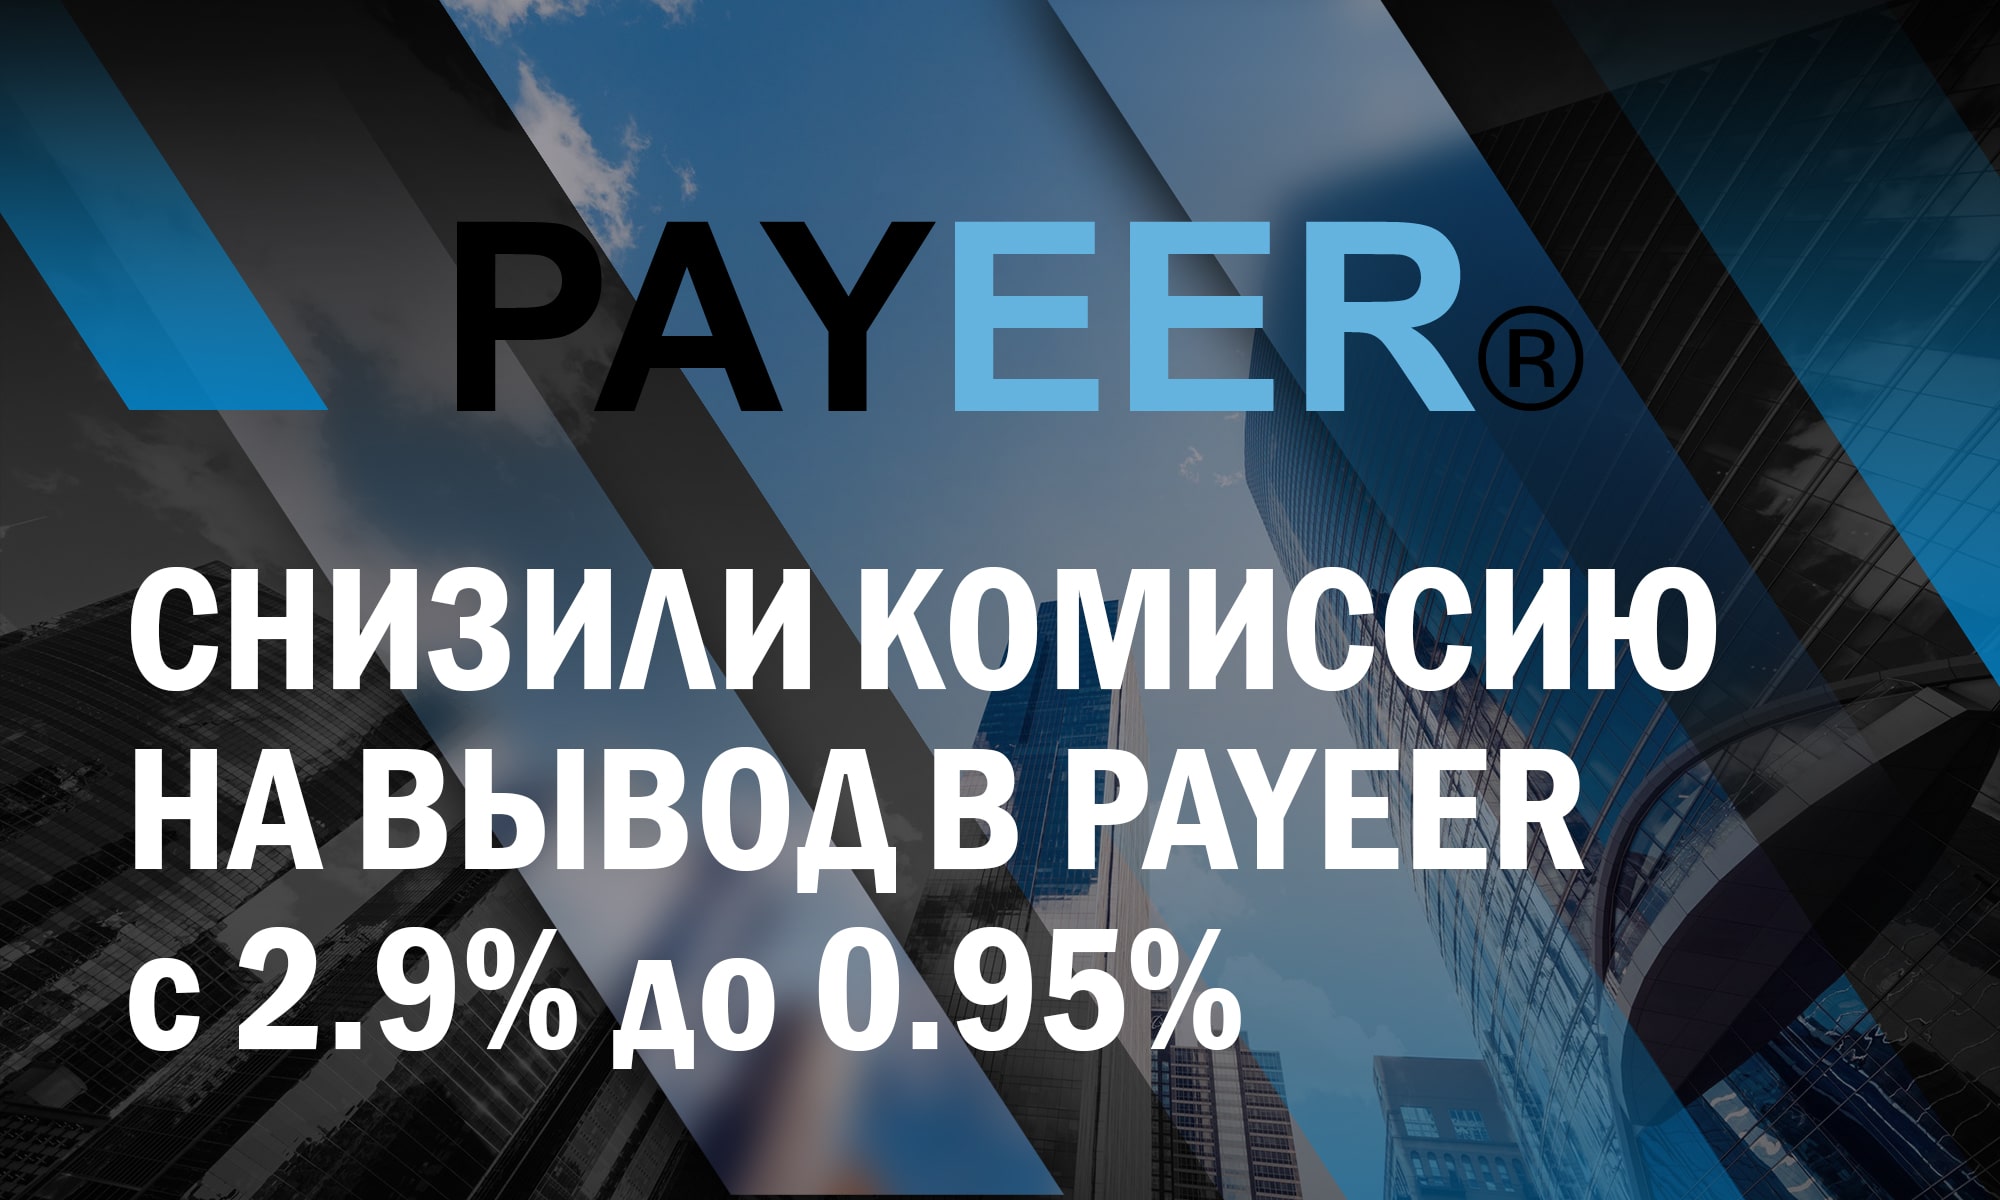 Снизили комиссию на вывод в Payeer с 2.9% до 0.95%